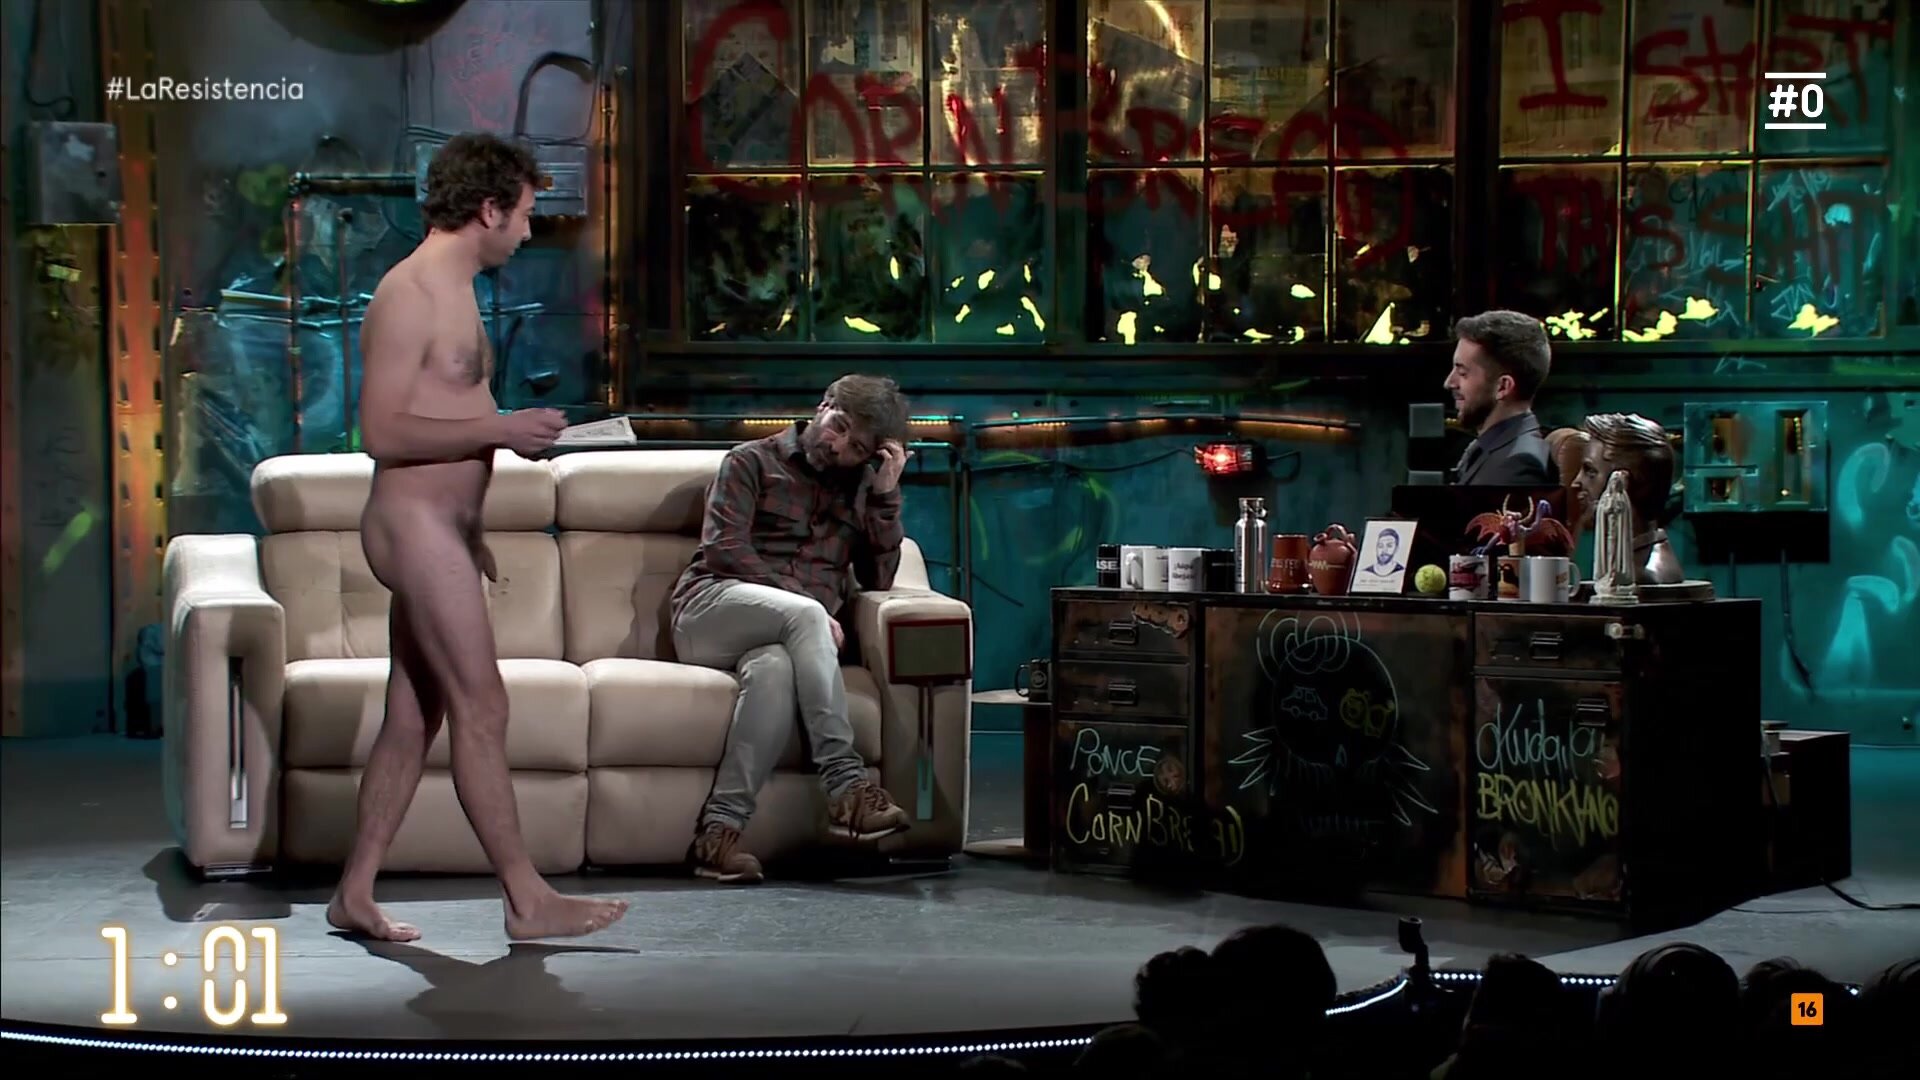 Nude guy in Spanish TV show